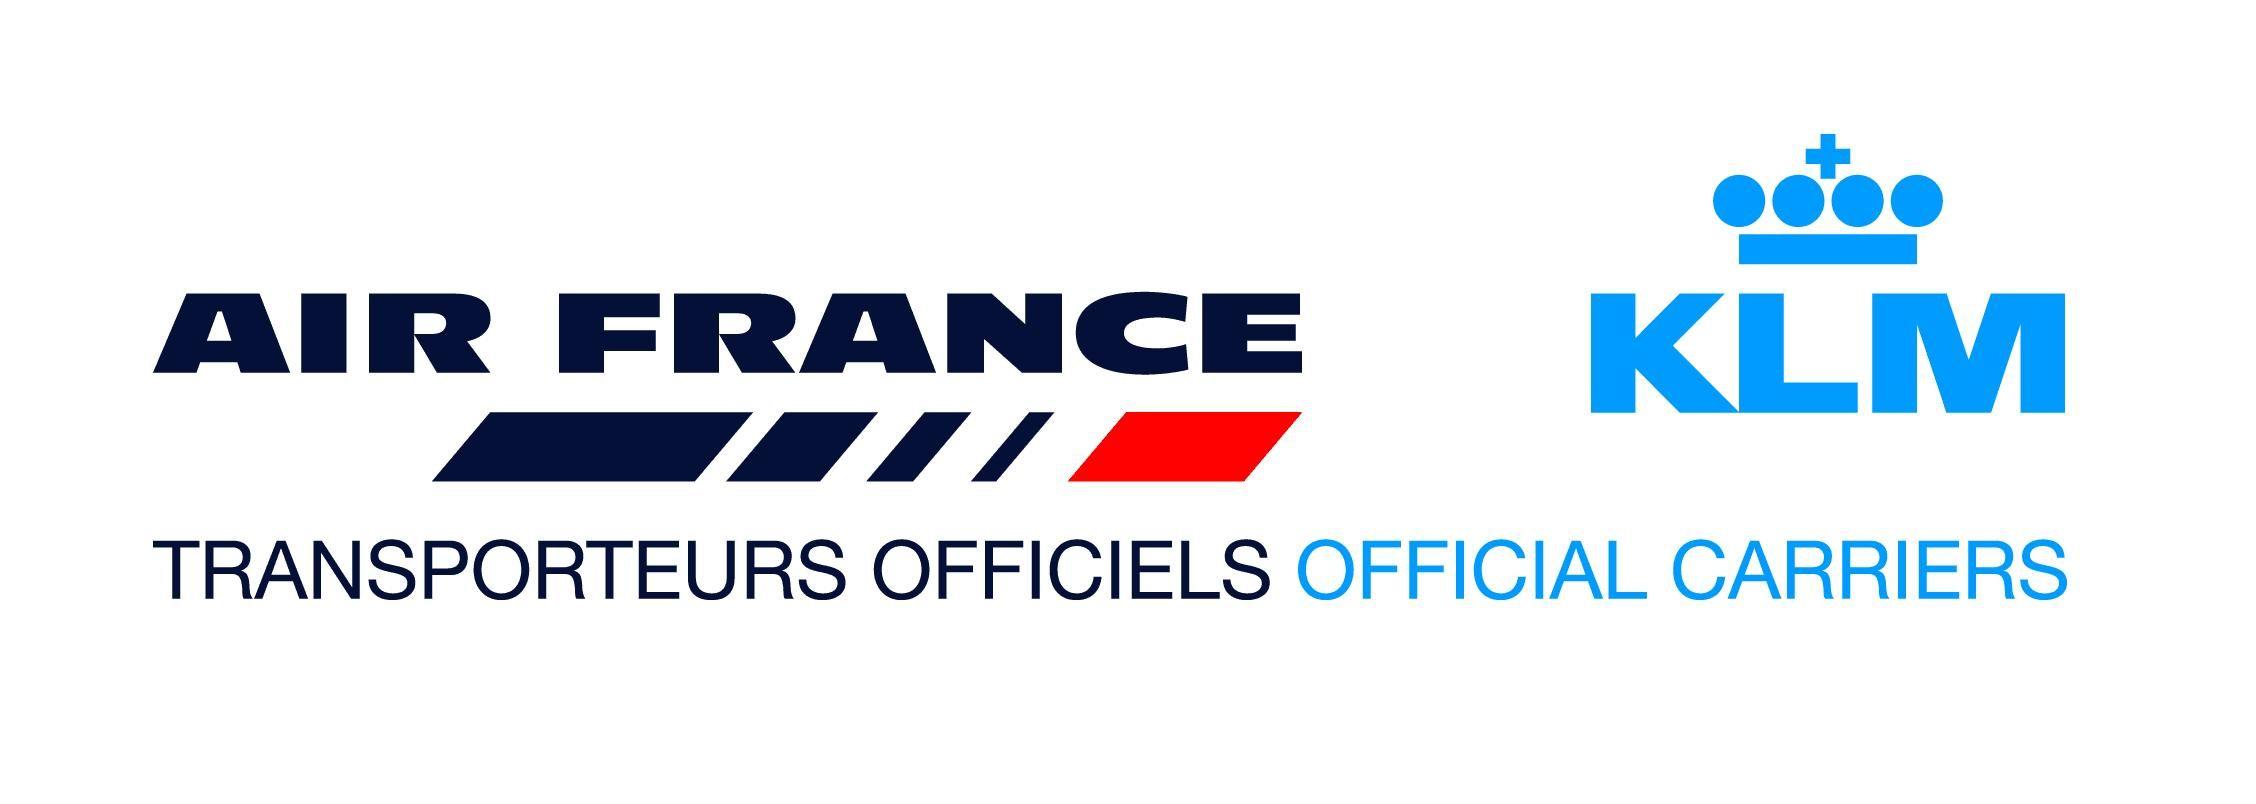 Air France Logo - Air France-KLM « Logos & Brands Directory